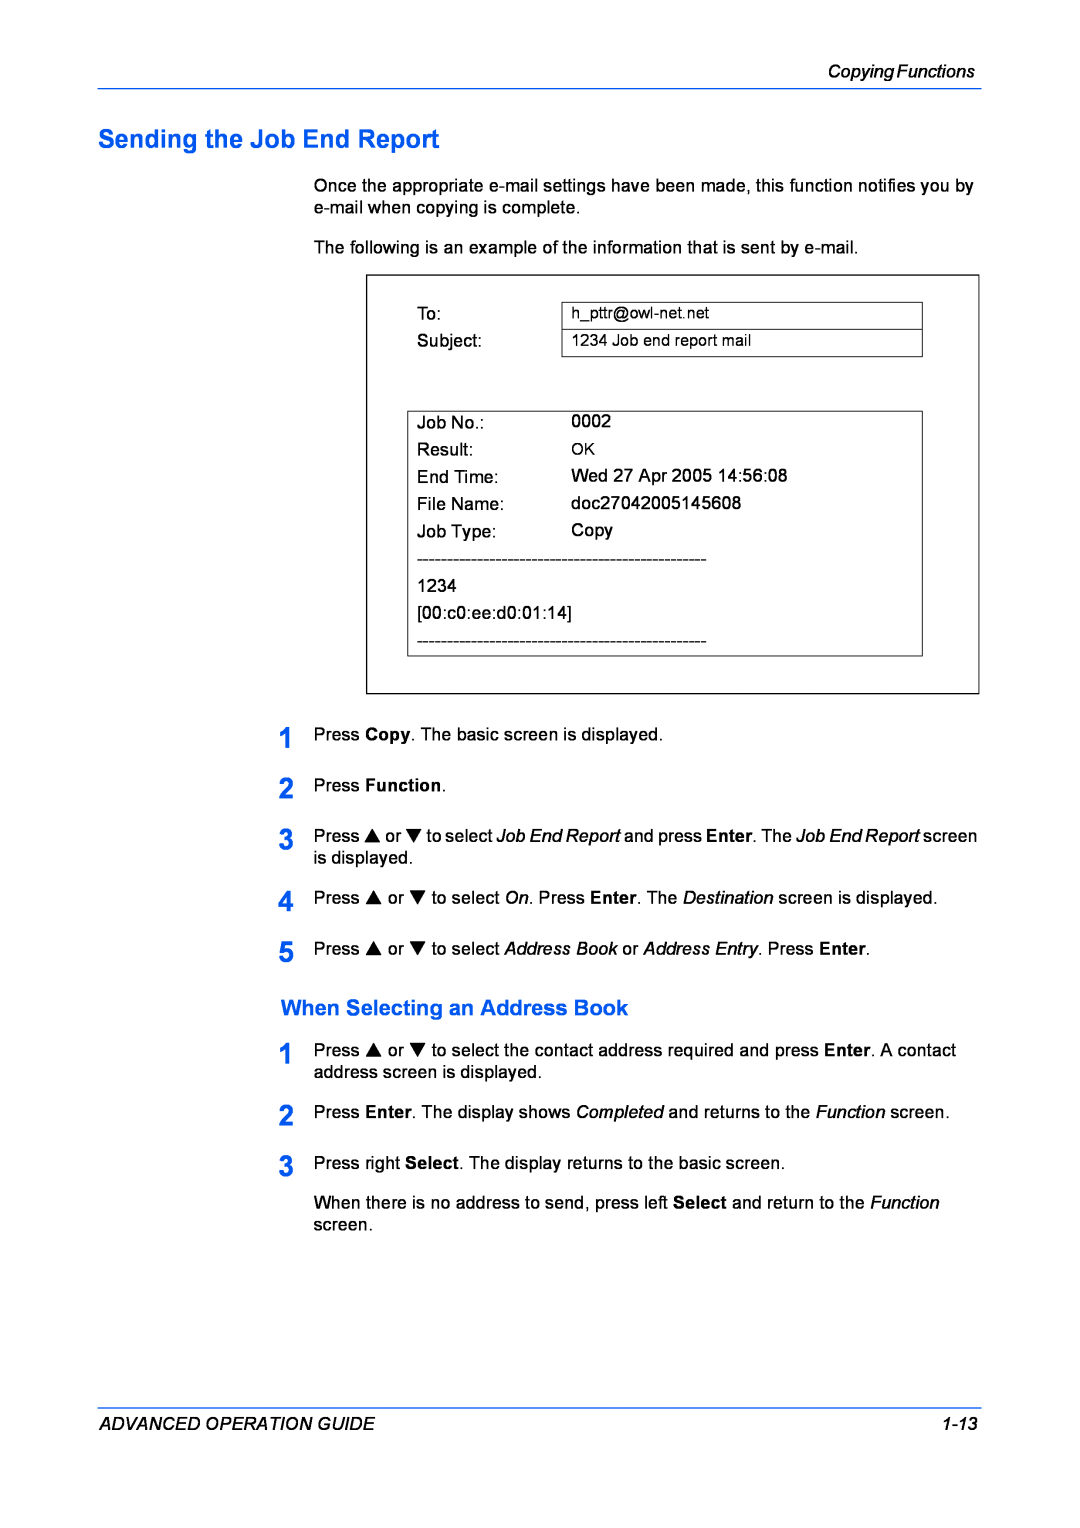 Kyocera KM-1820 manual Sending the Job End Report, When Selecting an Address Book 